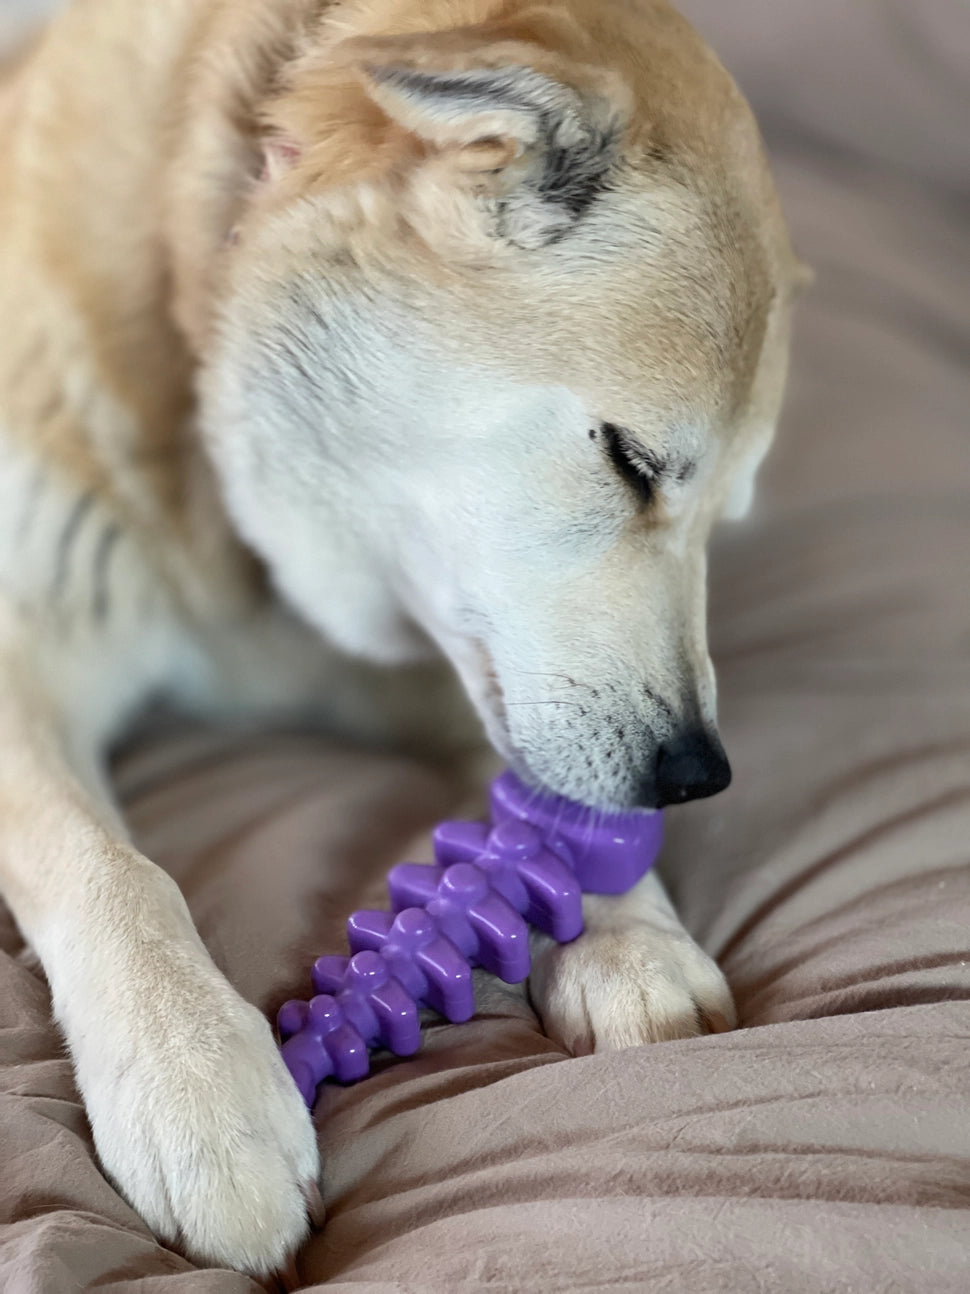 Fish Bone Ultra Durable Nylon Dog Chew Toy